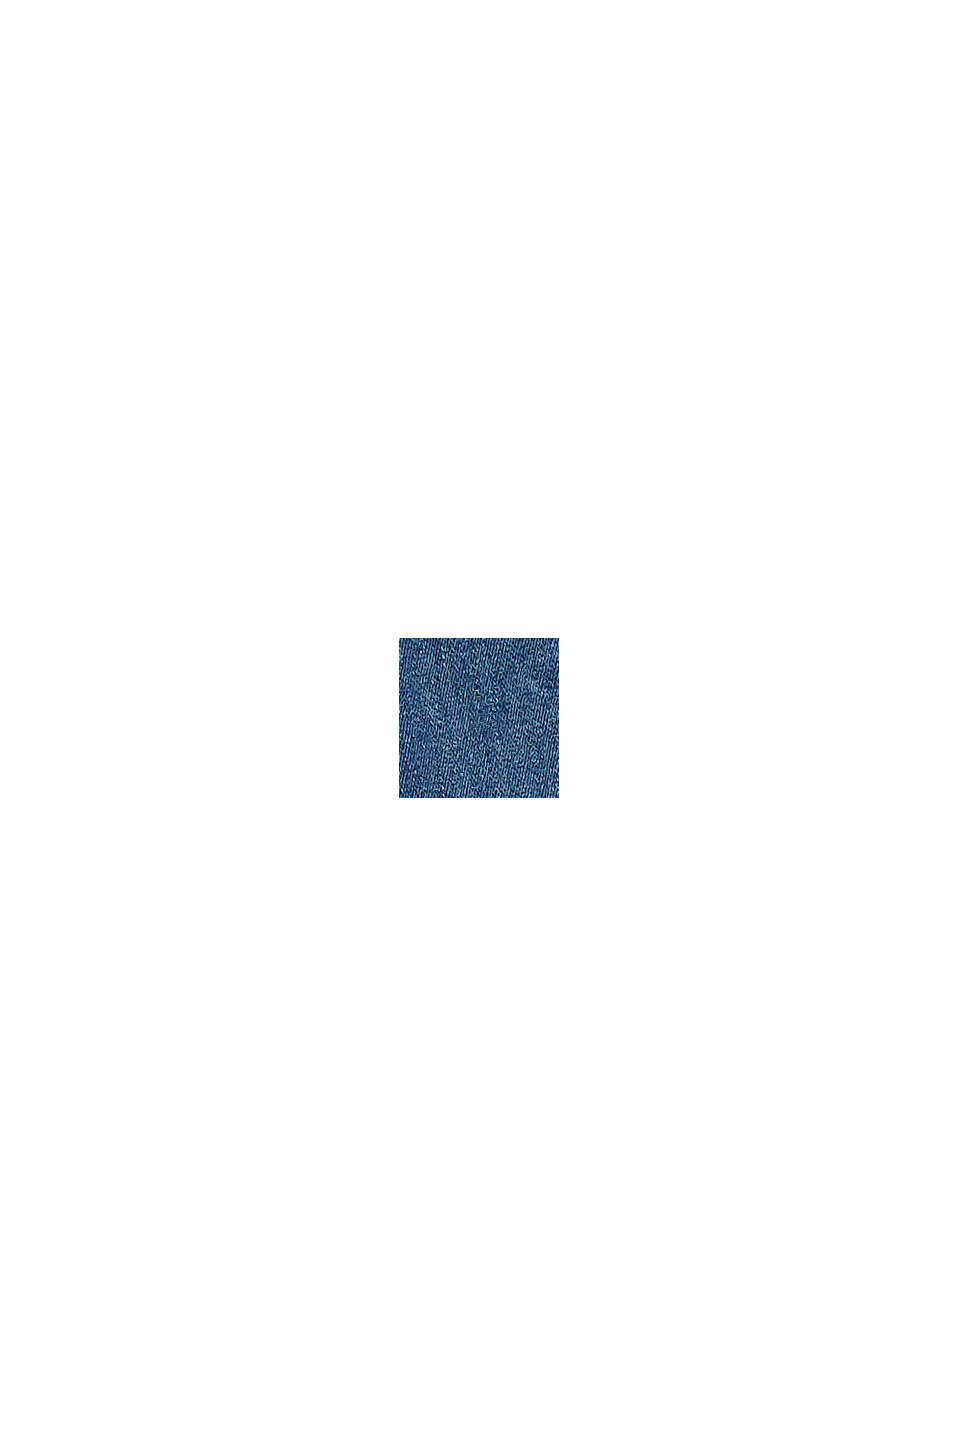 CURVY - Jeggings de algodón ecológico, BLUE MEDIUM WASHED, swatch